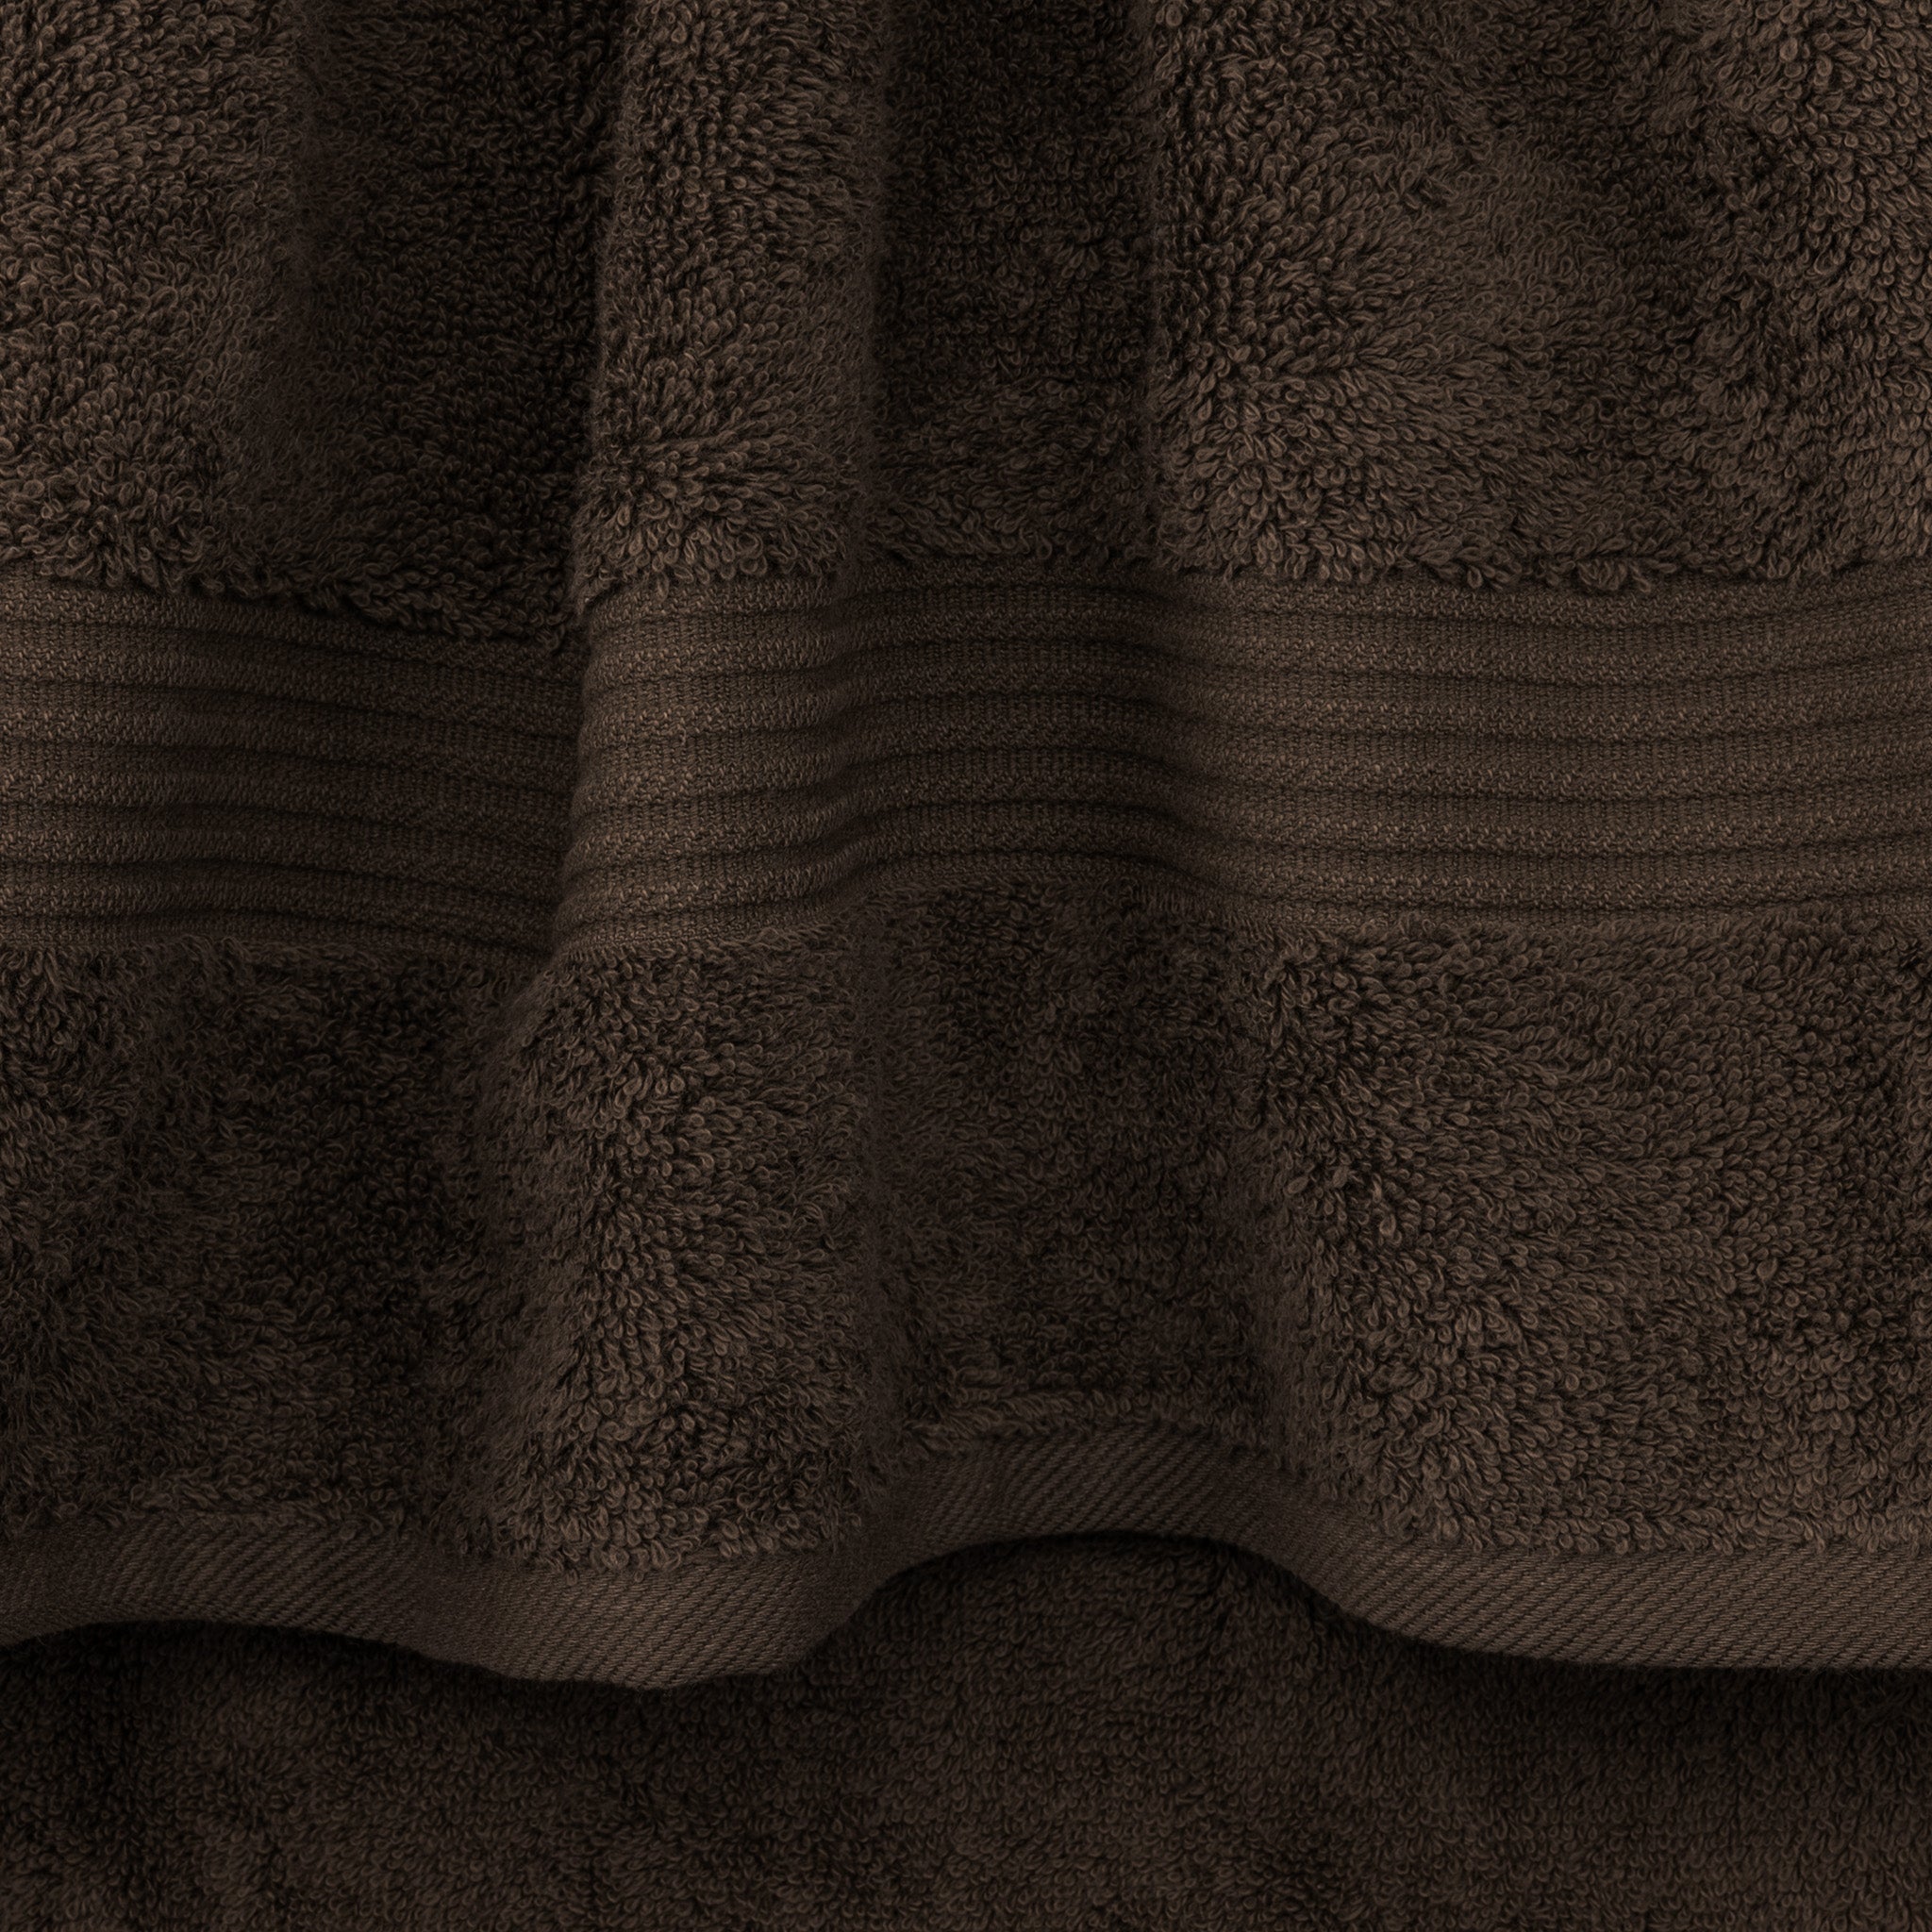 American Soft Linen Bekos 100% Cotton Turkish Towels, 4 Piece Washcloth Towel Set -chocolate-brown-04